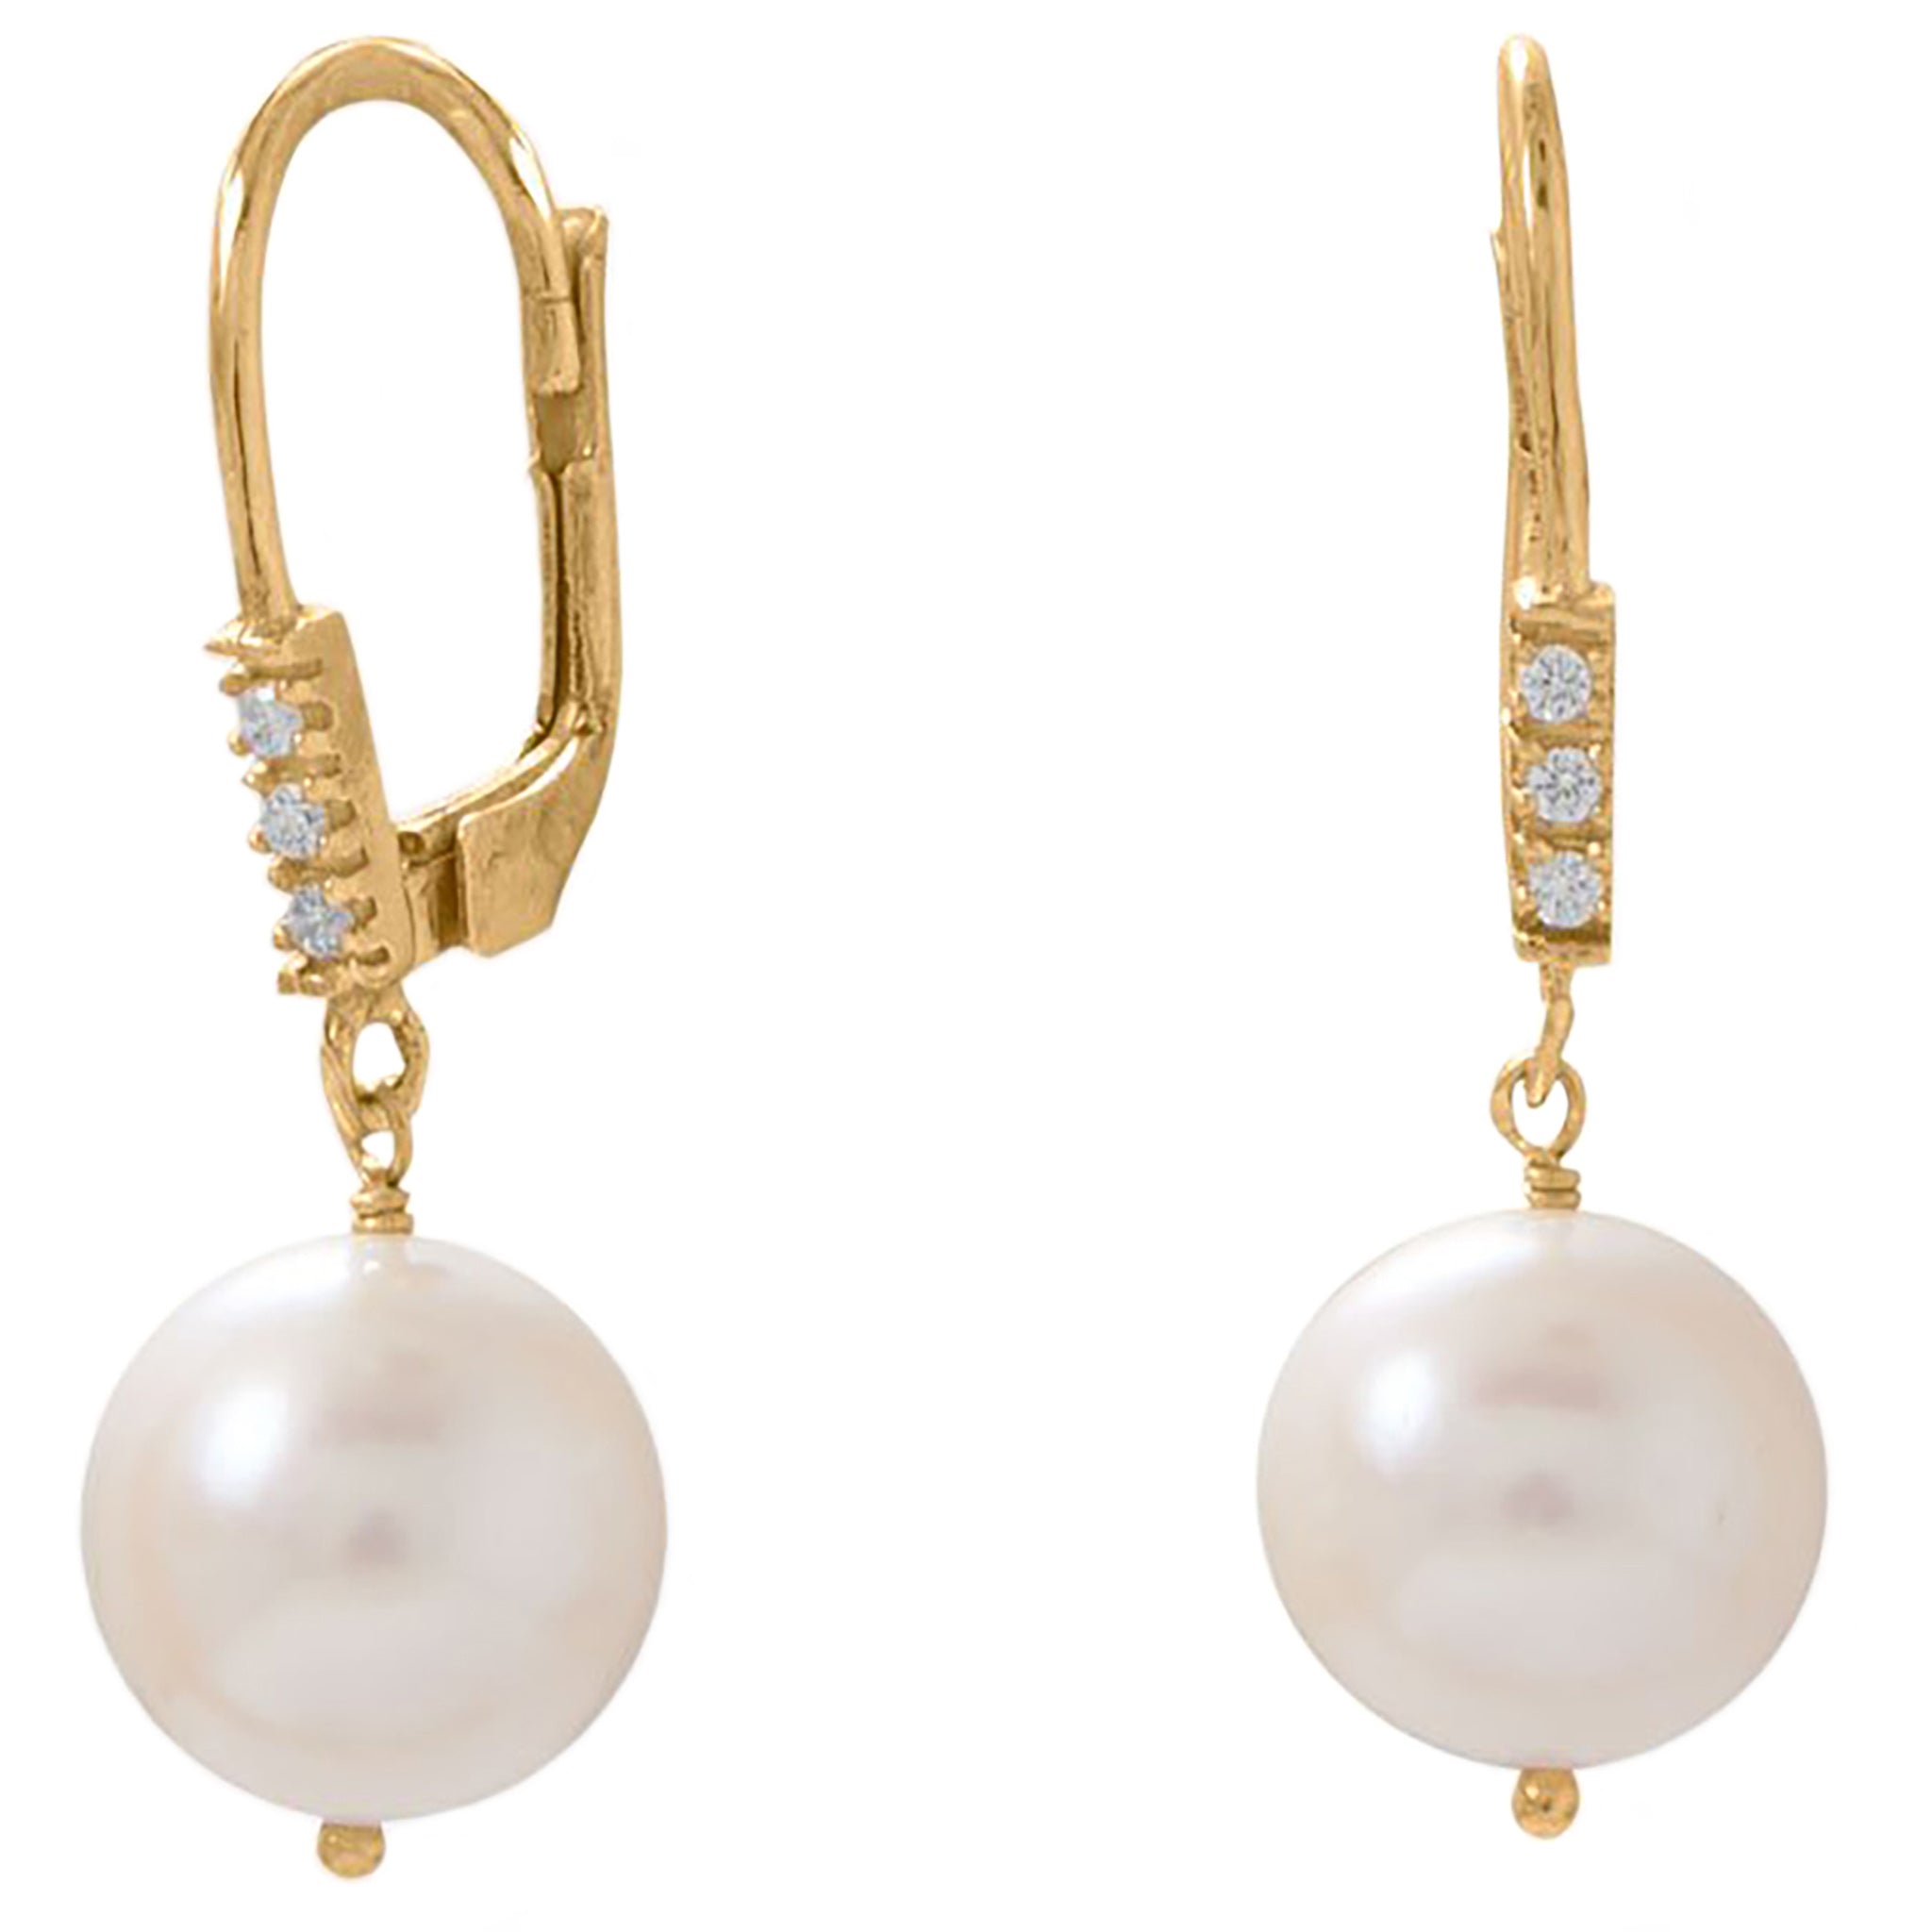 Freshwater Pearl Gold Earrings